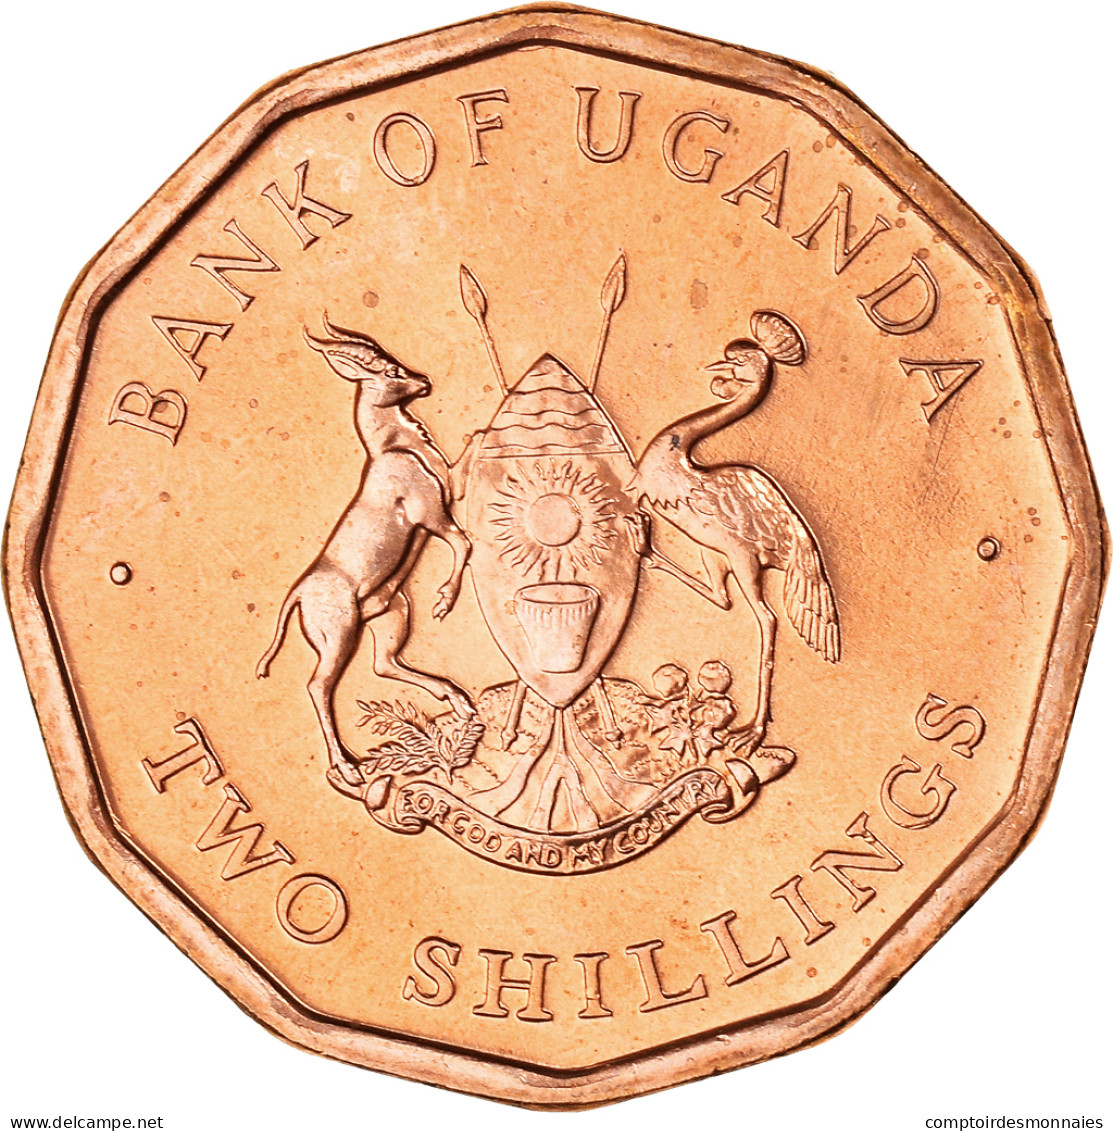 Monnaie, Ouganda, 2 Shillings, 1987, SUP+, Cuivre Plaqué Acier, KM:28 - Uganda